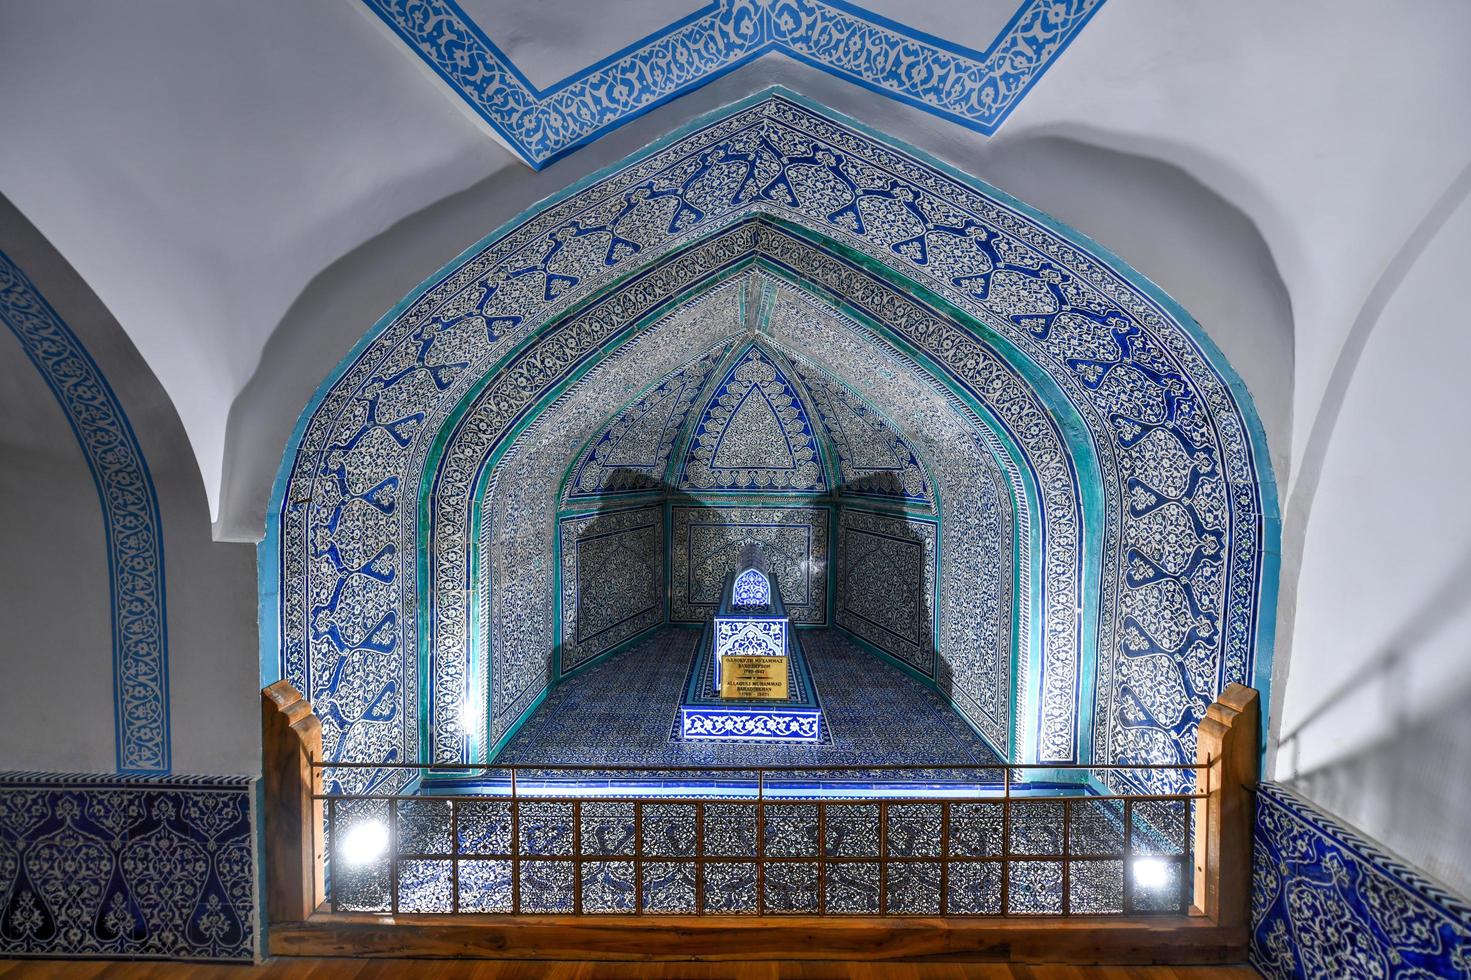 khiva, uzbekistan - juli 13, 2019 - pahlavan-mahmud mausoleum i khiva, uzbekistan. Gjort i de tradition av khorezm arkitektur av xviii-xix århundraden. foto